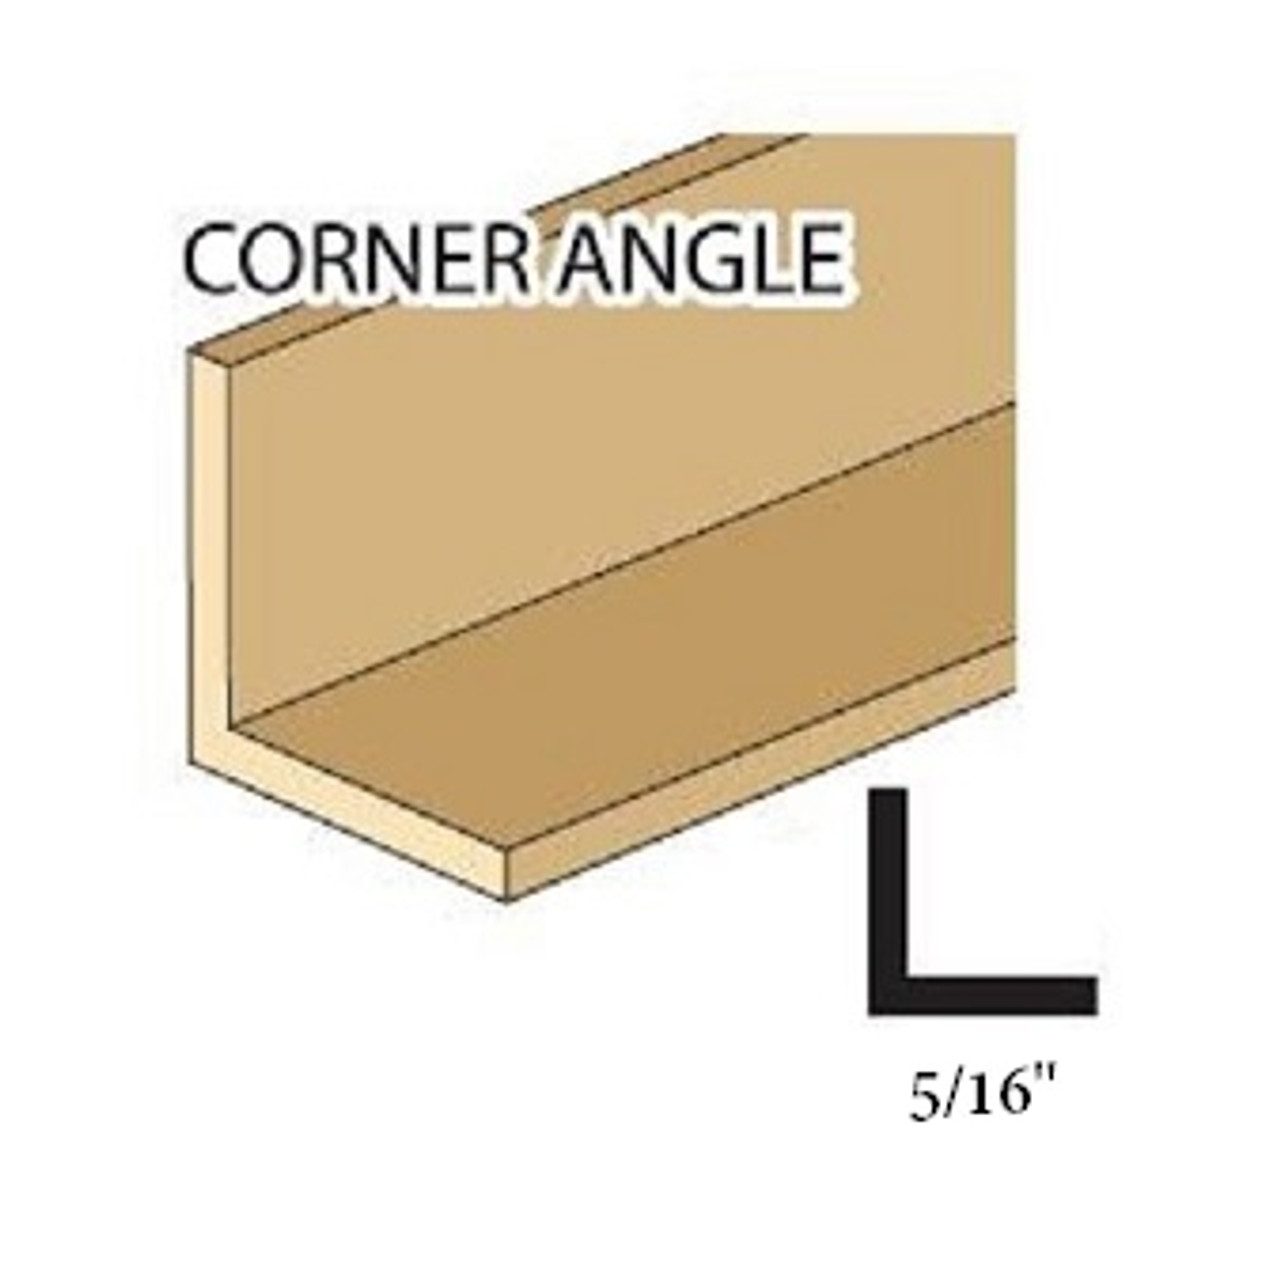 Illustrated image of 5/16" corner angle wood trim